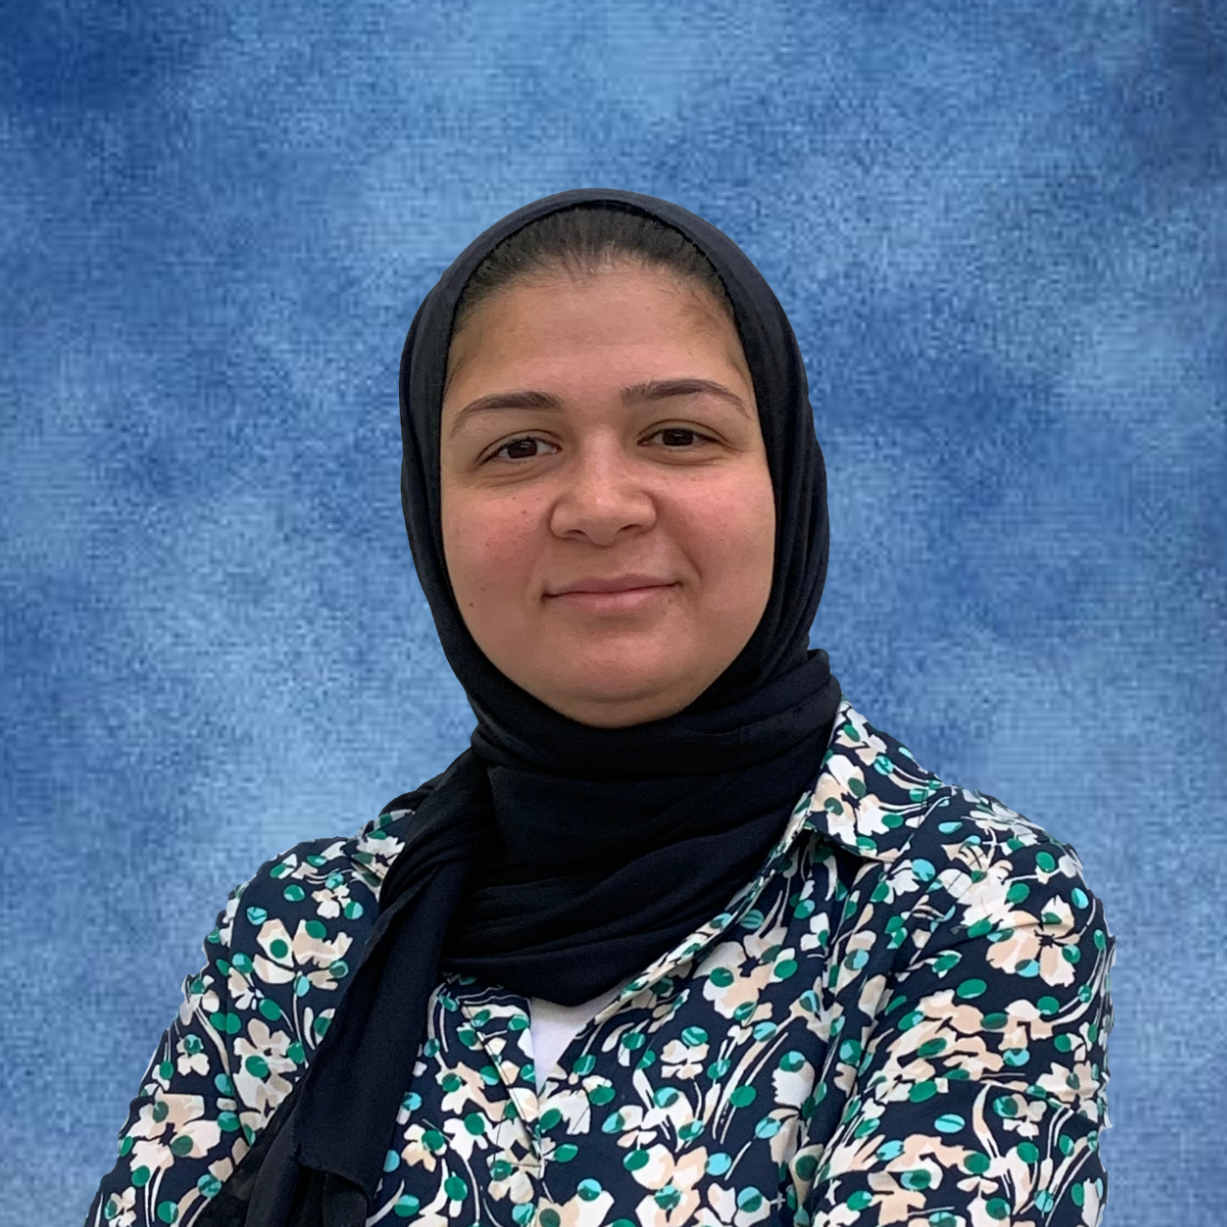 Ms. Zeina Hijazi